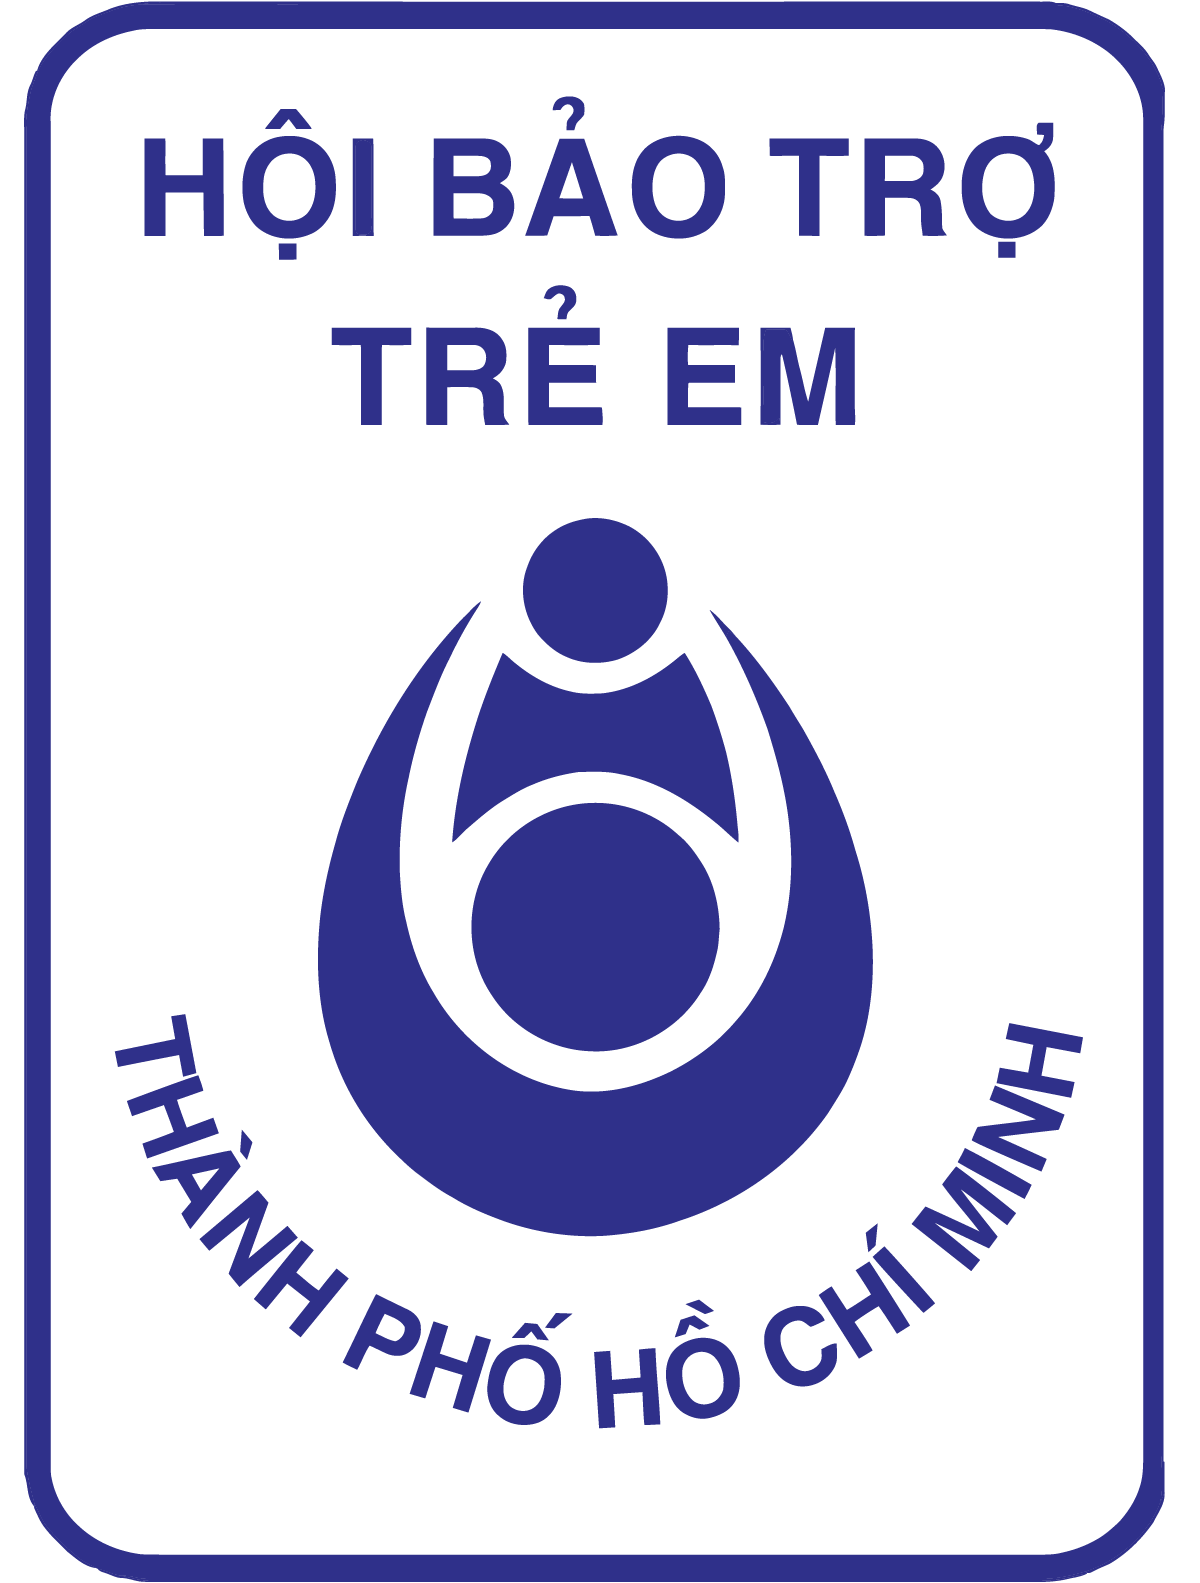 Hoi Bao tro tre em TP.HCM HCMC Child Welfare Association